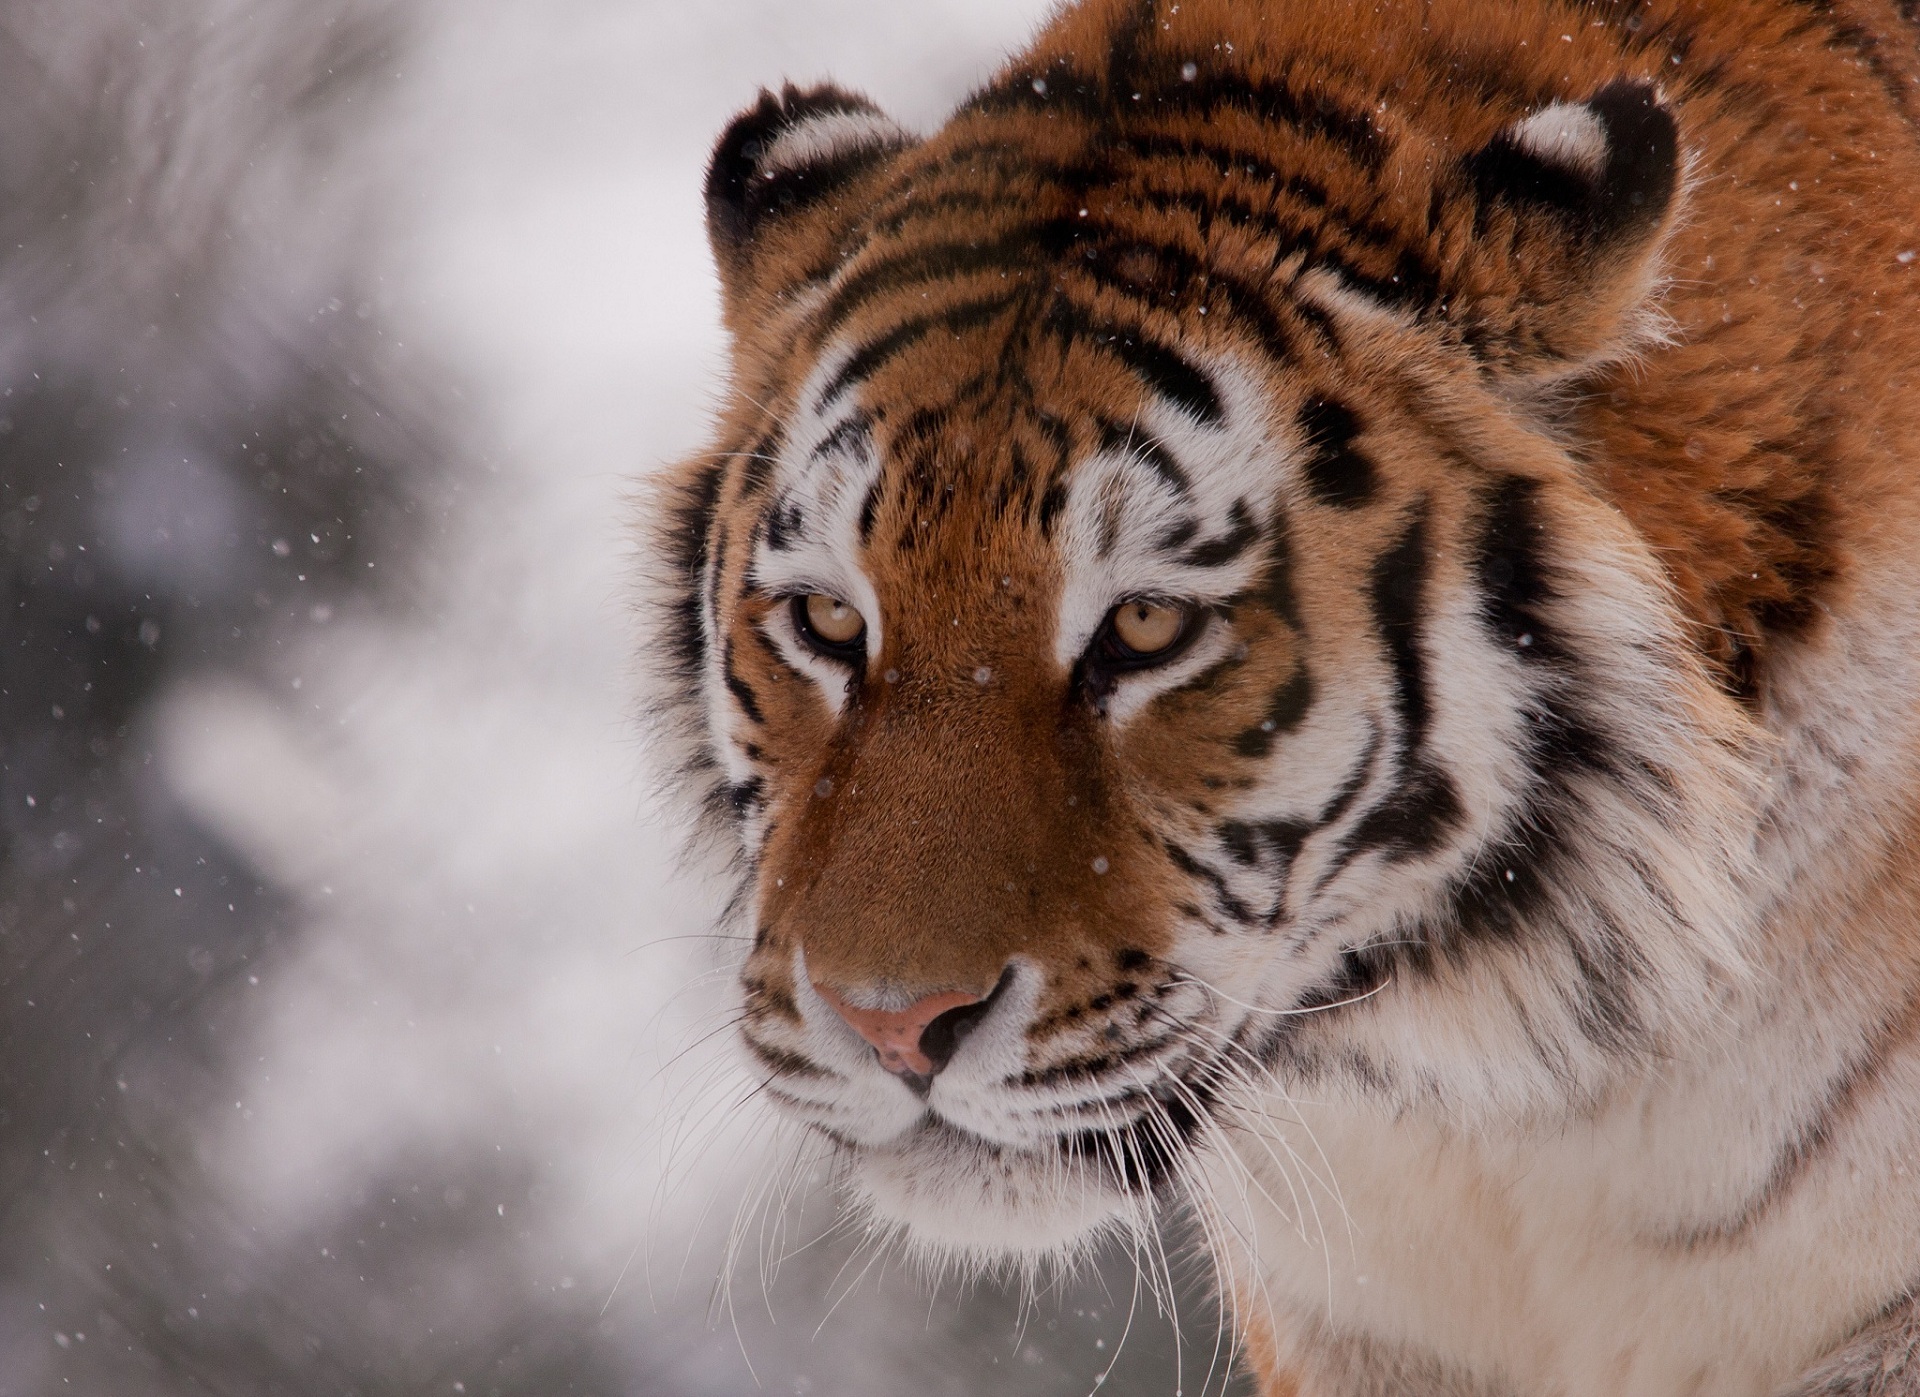 Tiger Wild Cat Animal Winter Snow Wallpaper Background